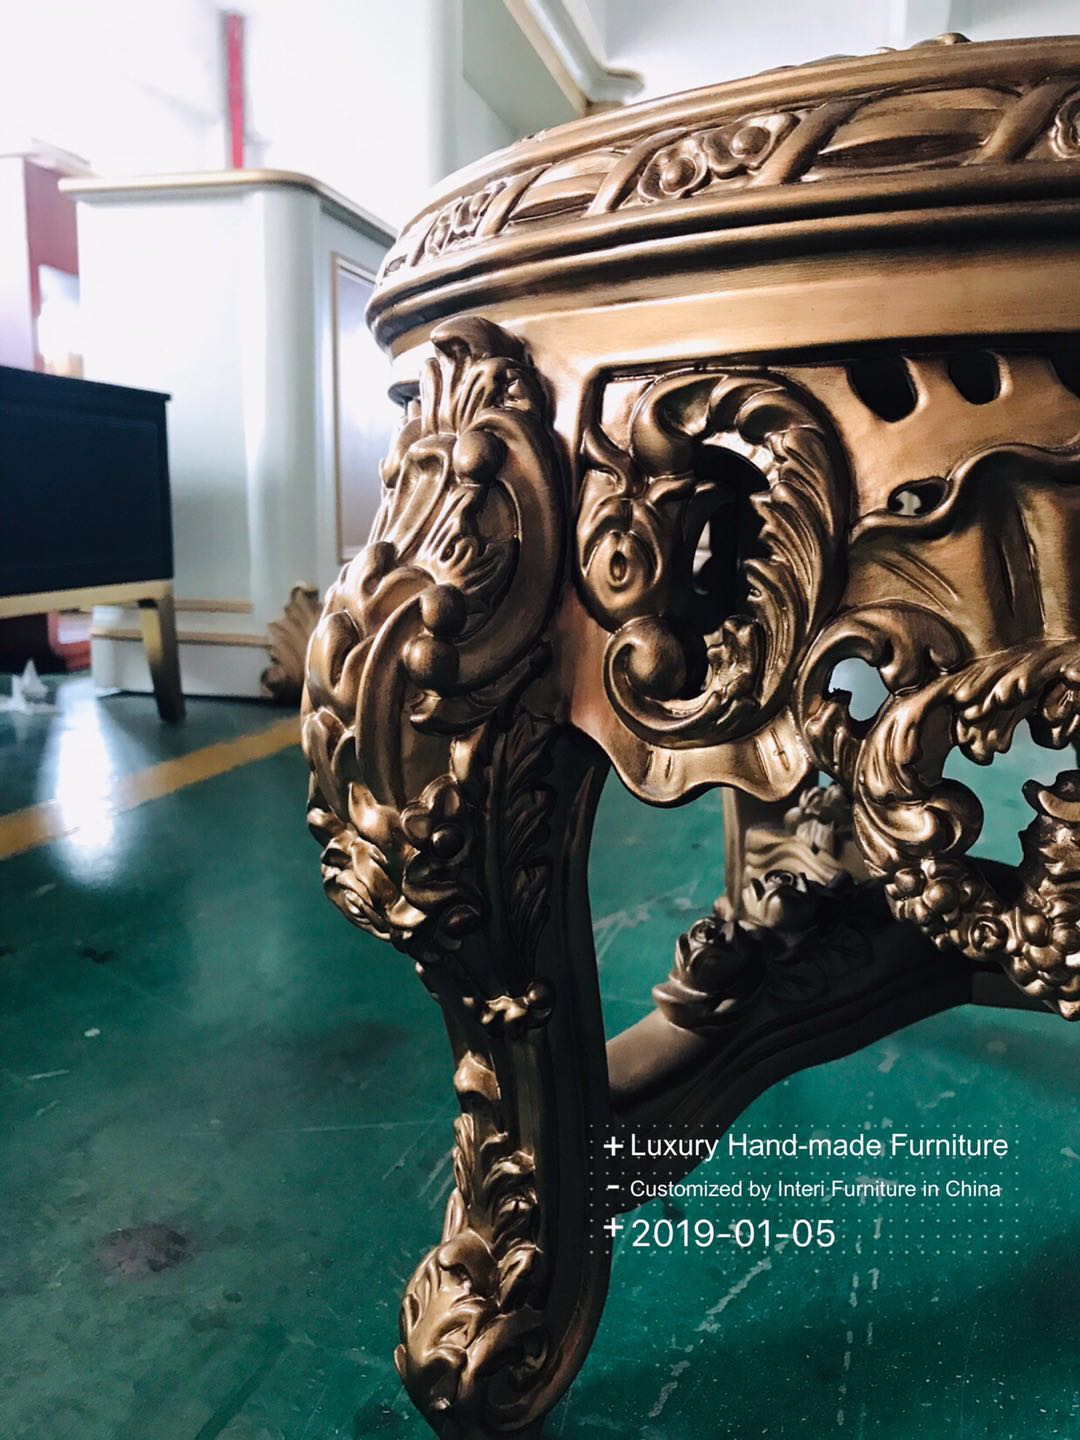 luxury custom furniture made by china furniture factory-interi furniture 